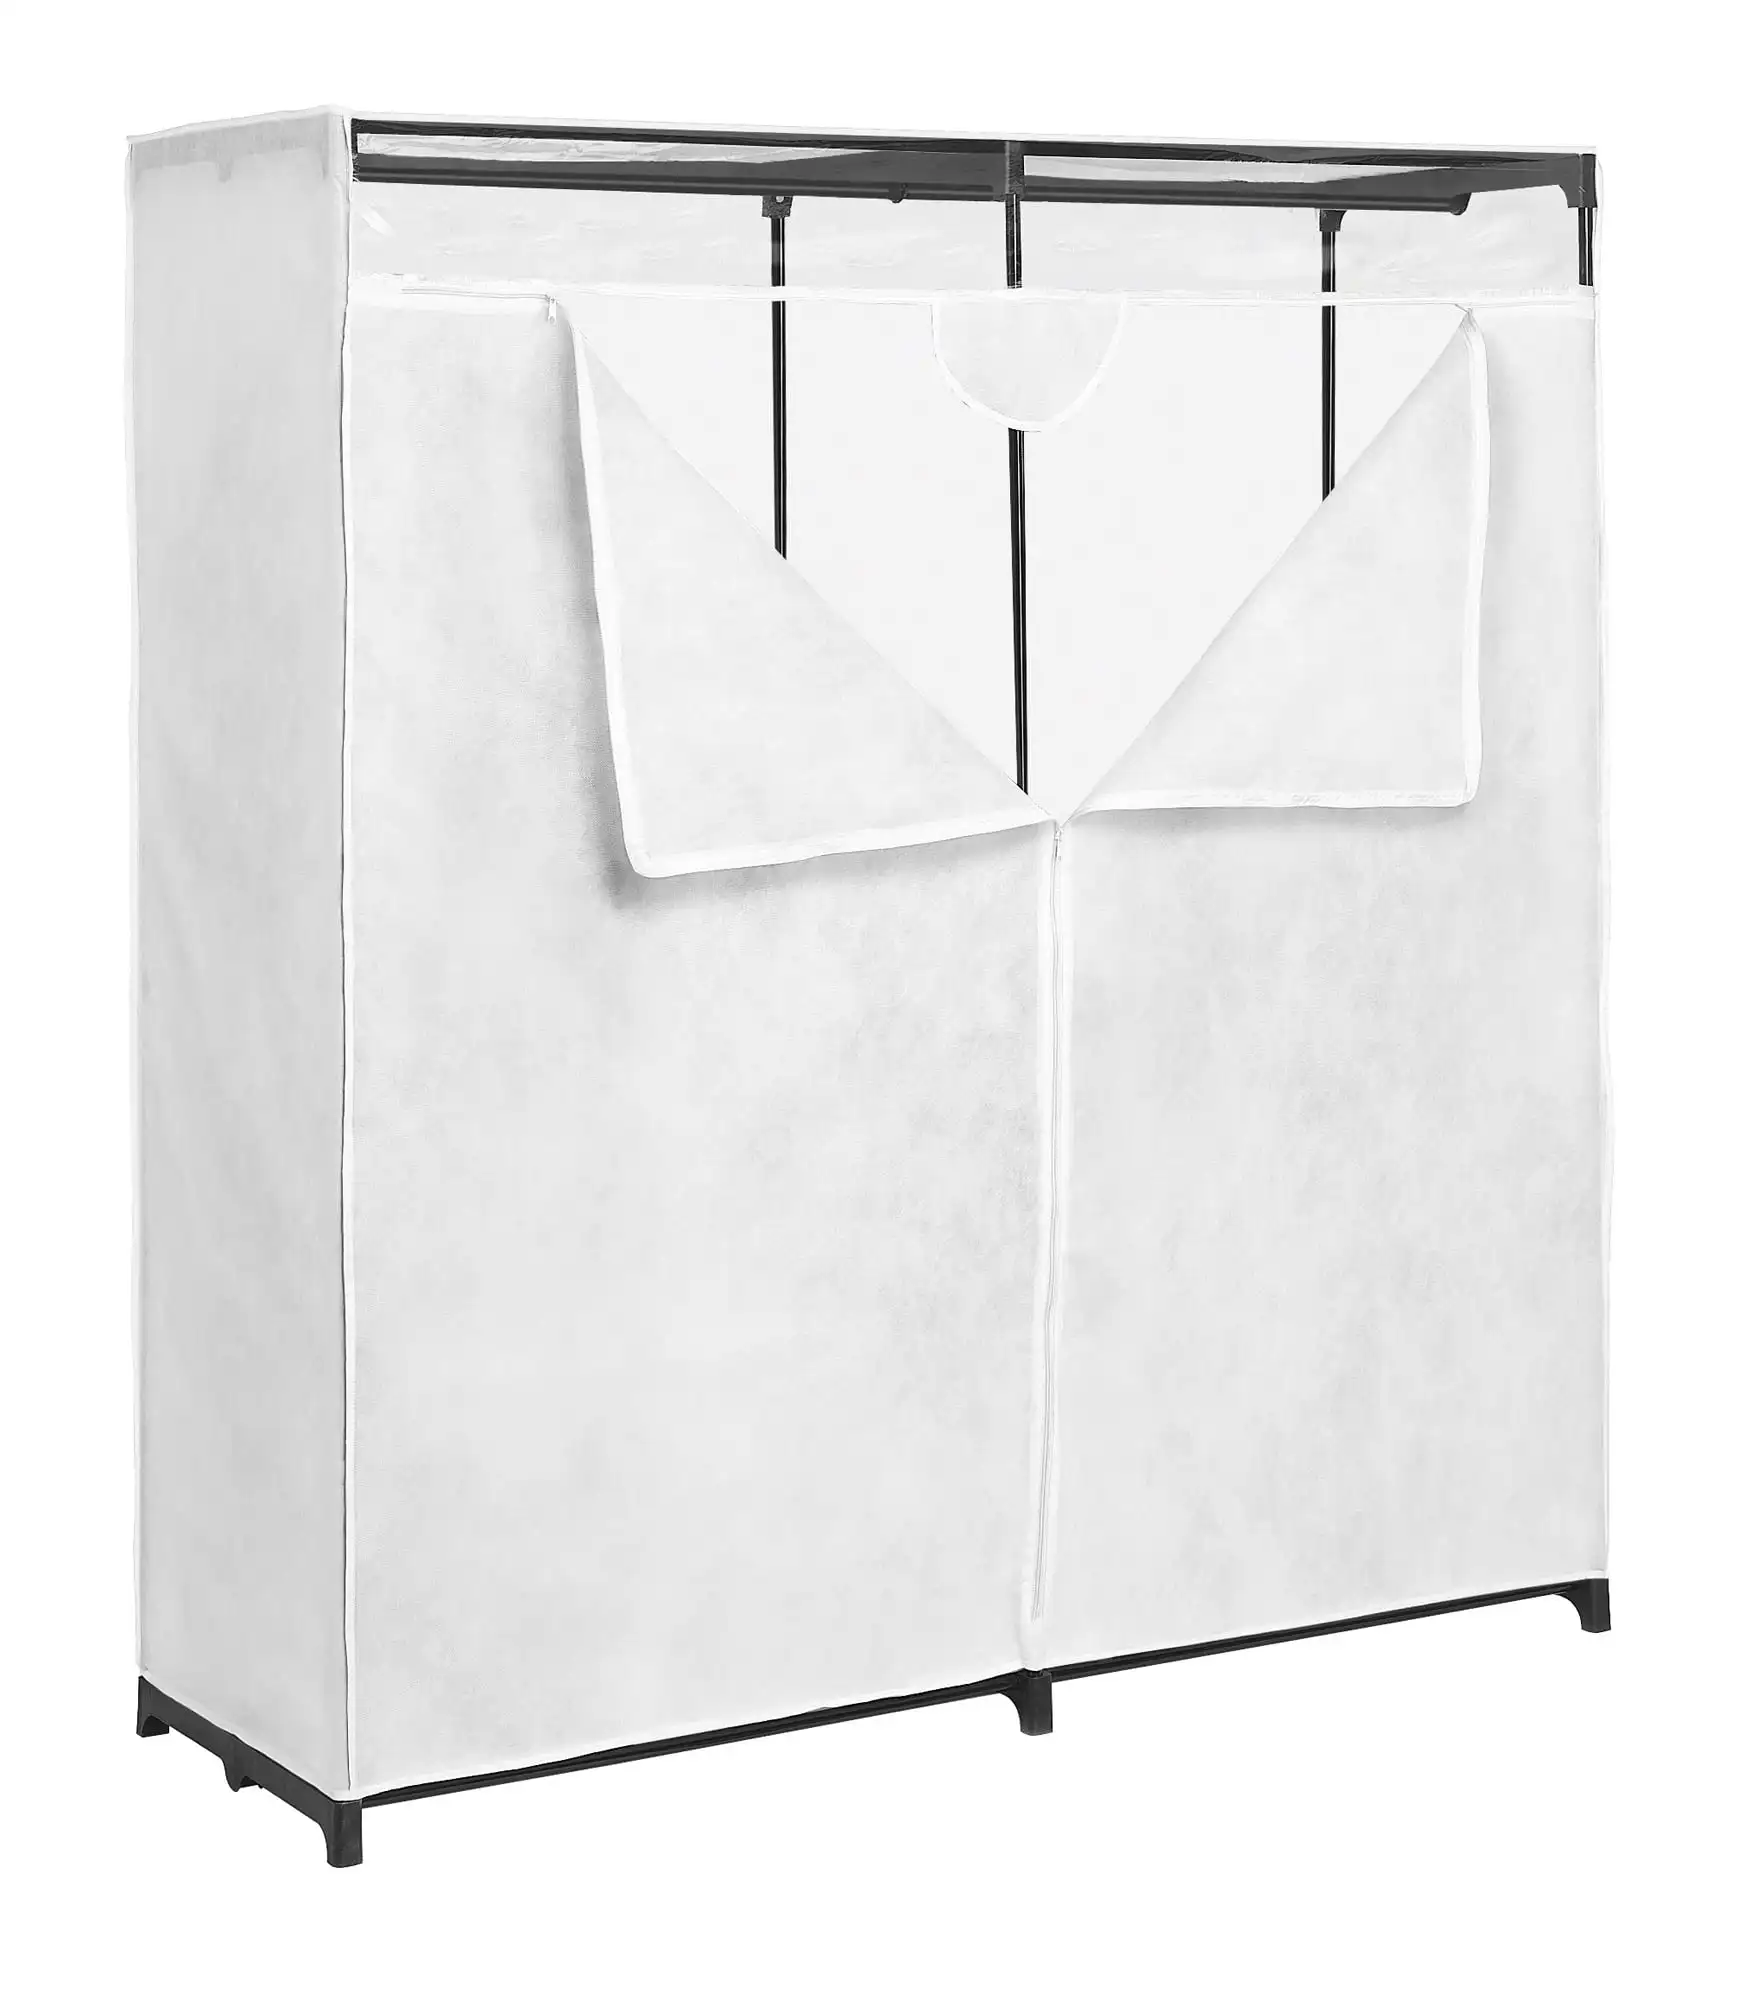 

Whitmor 60-inch Extra-Wide Portable Metal Closet & White Polypropylene Nonwoven Fabric Cover